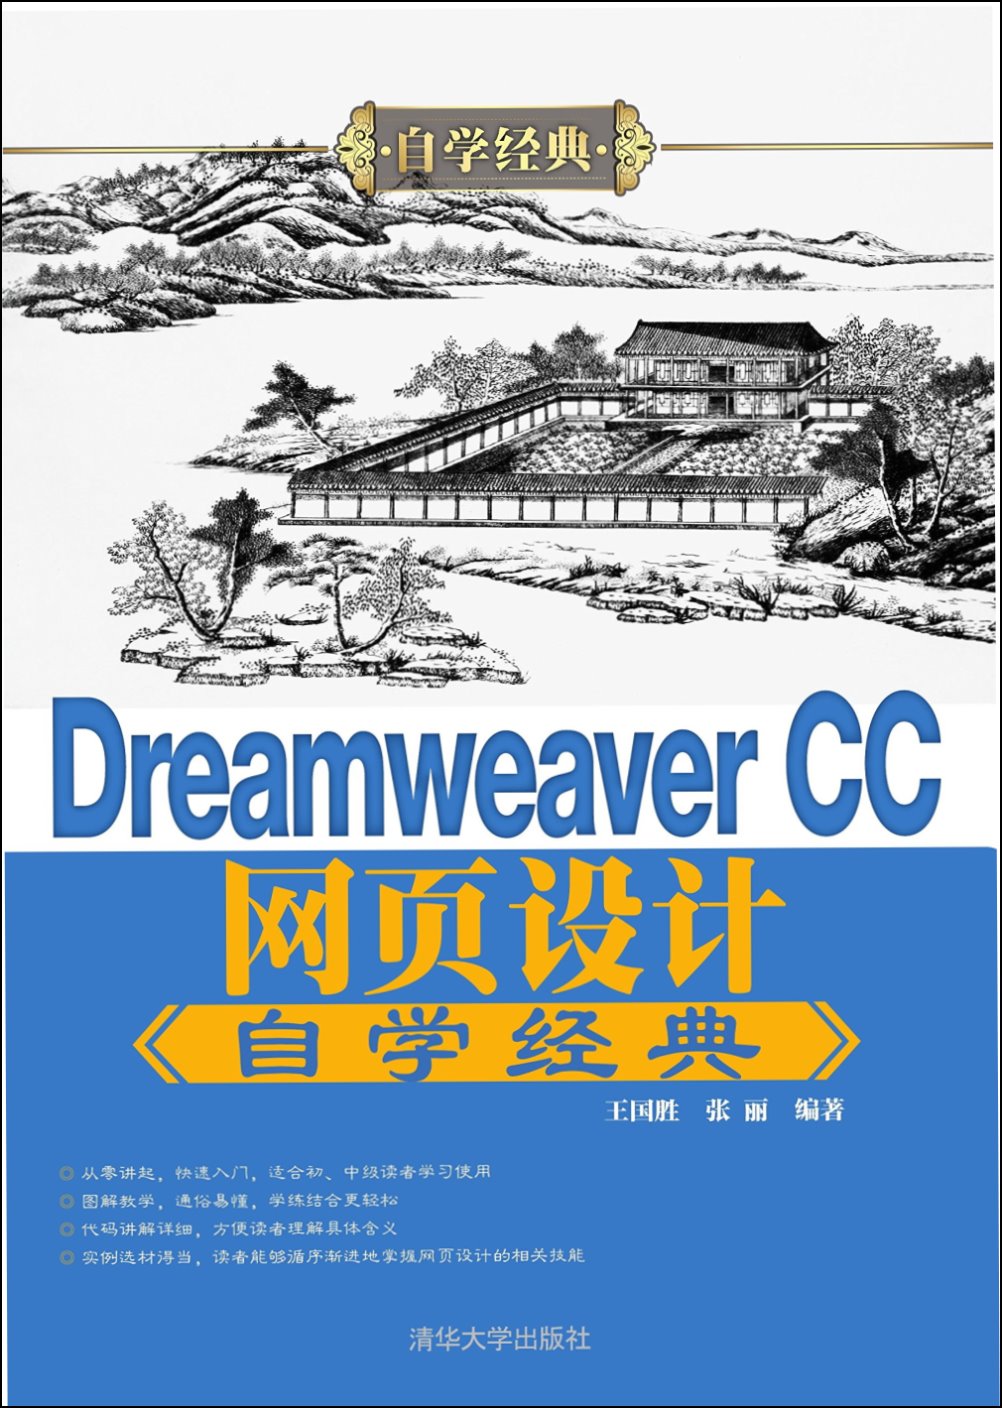 Dreamweaver CC網頁設計自學經典